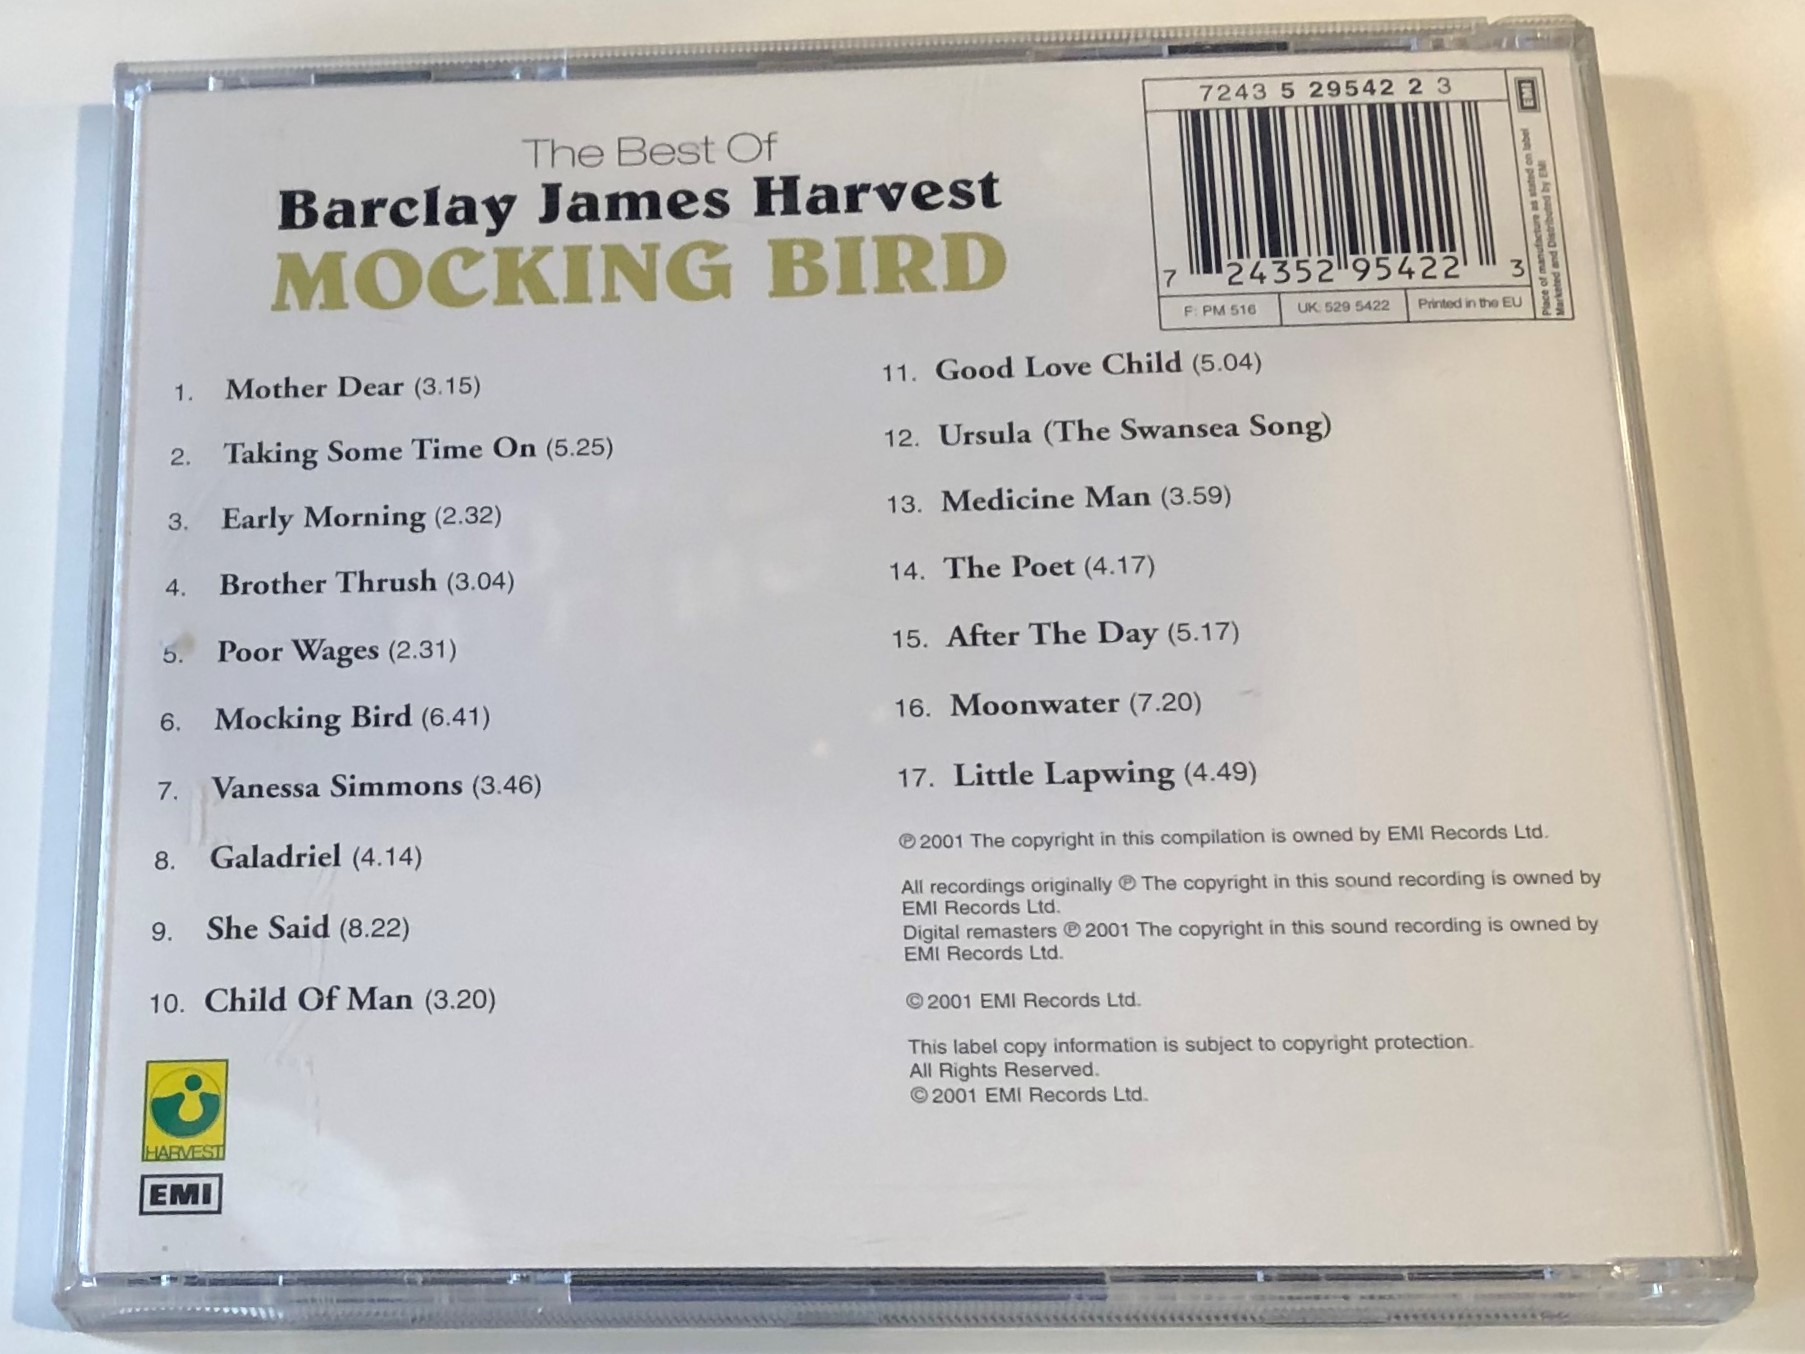 the-best-of-barclay-james-harvest-mocking-bird-emi-audio-cd-2001-724352954223-2-.jpg